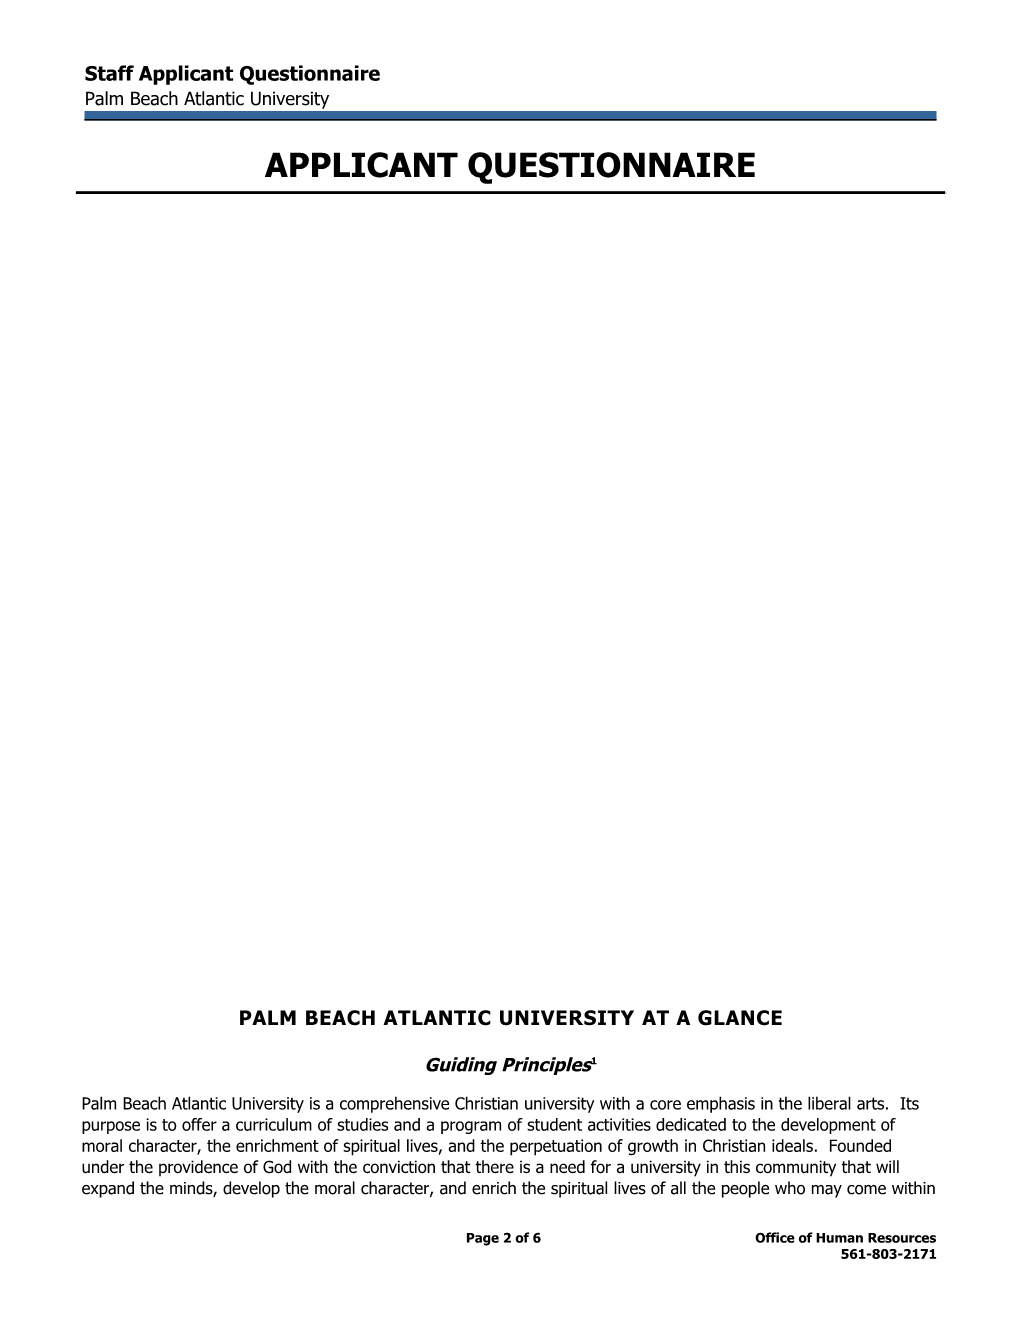 STAFF Pre-Employment Questionnaire